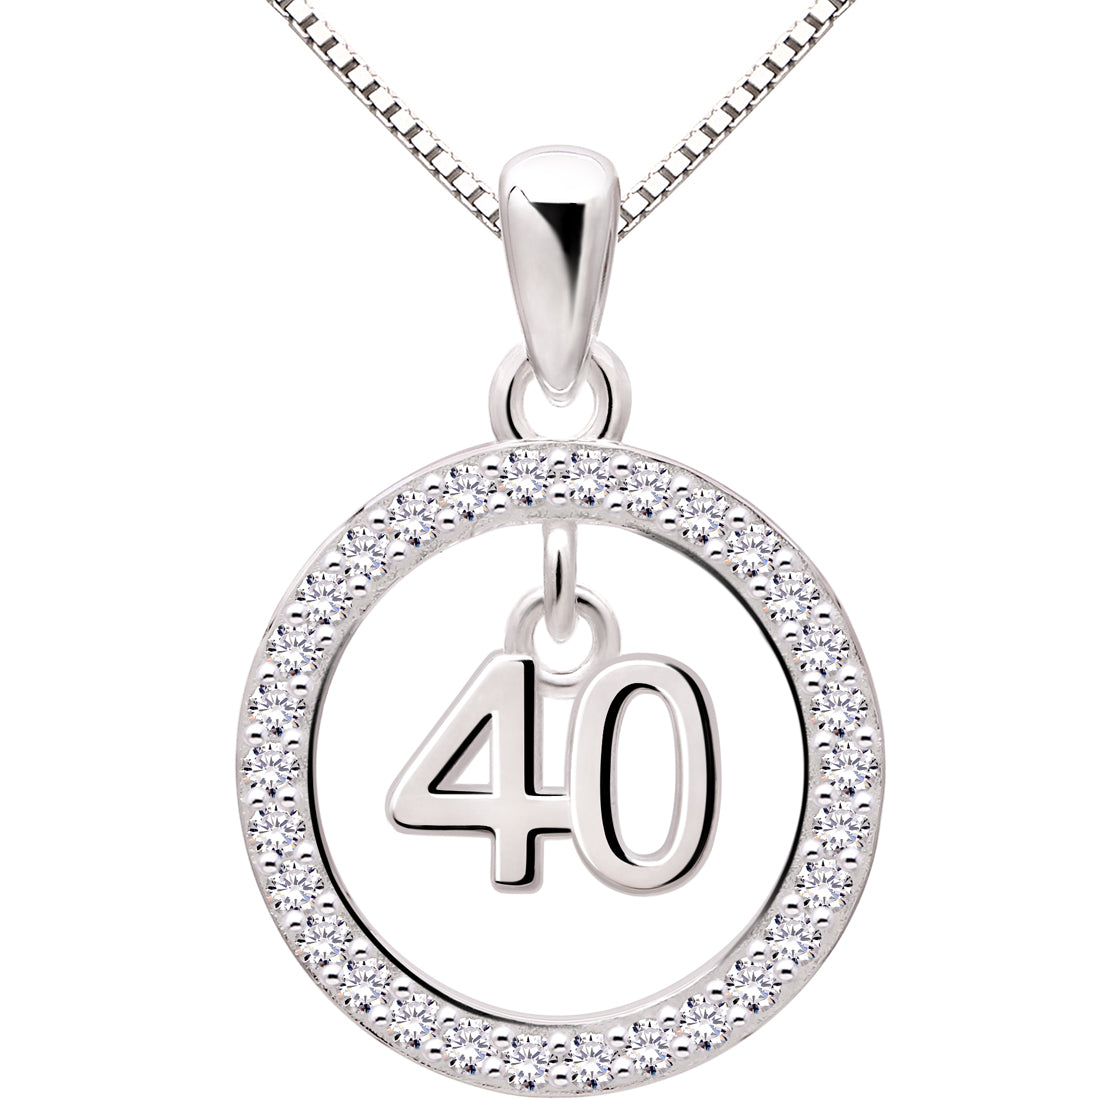 ALOV 珠宝纯银 40 岁生日周年纪念幸运数字 40 方晶锆石吊坠项链